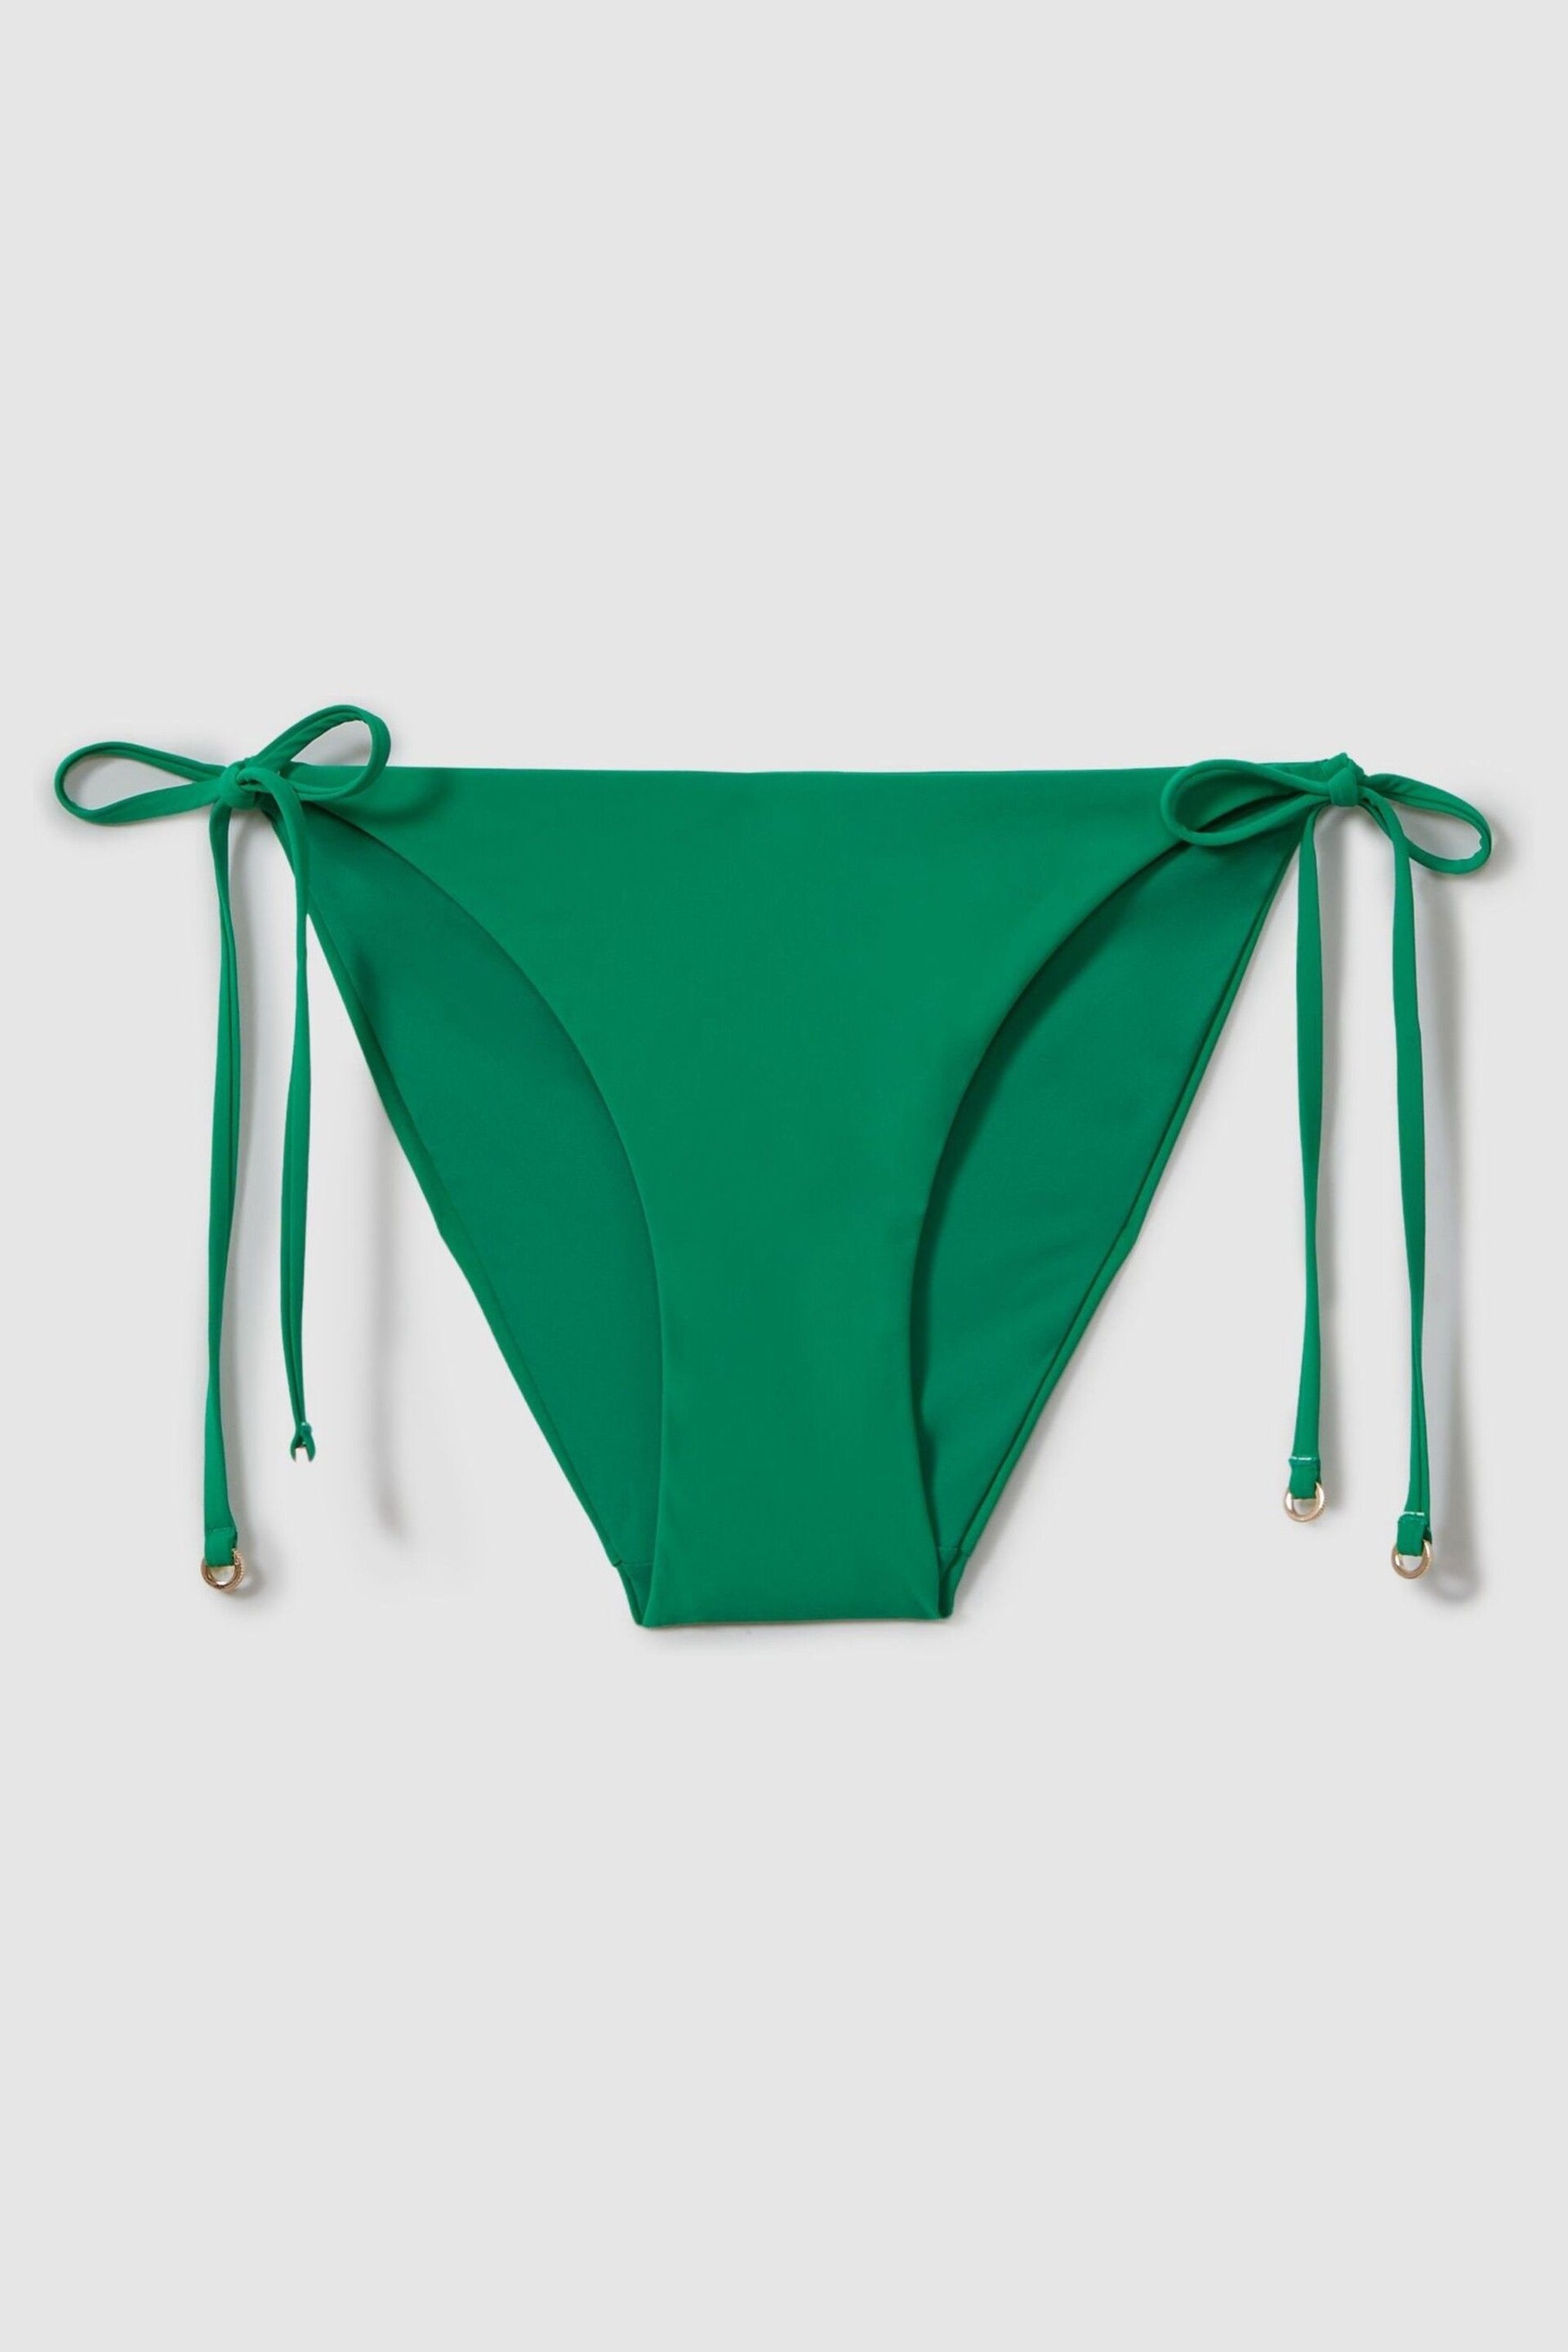 Reiss Green Riah Side Tie Bikini Bottoms - Image 2 of 4